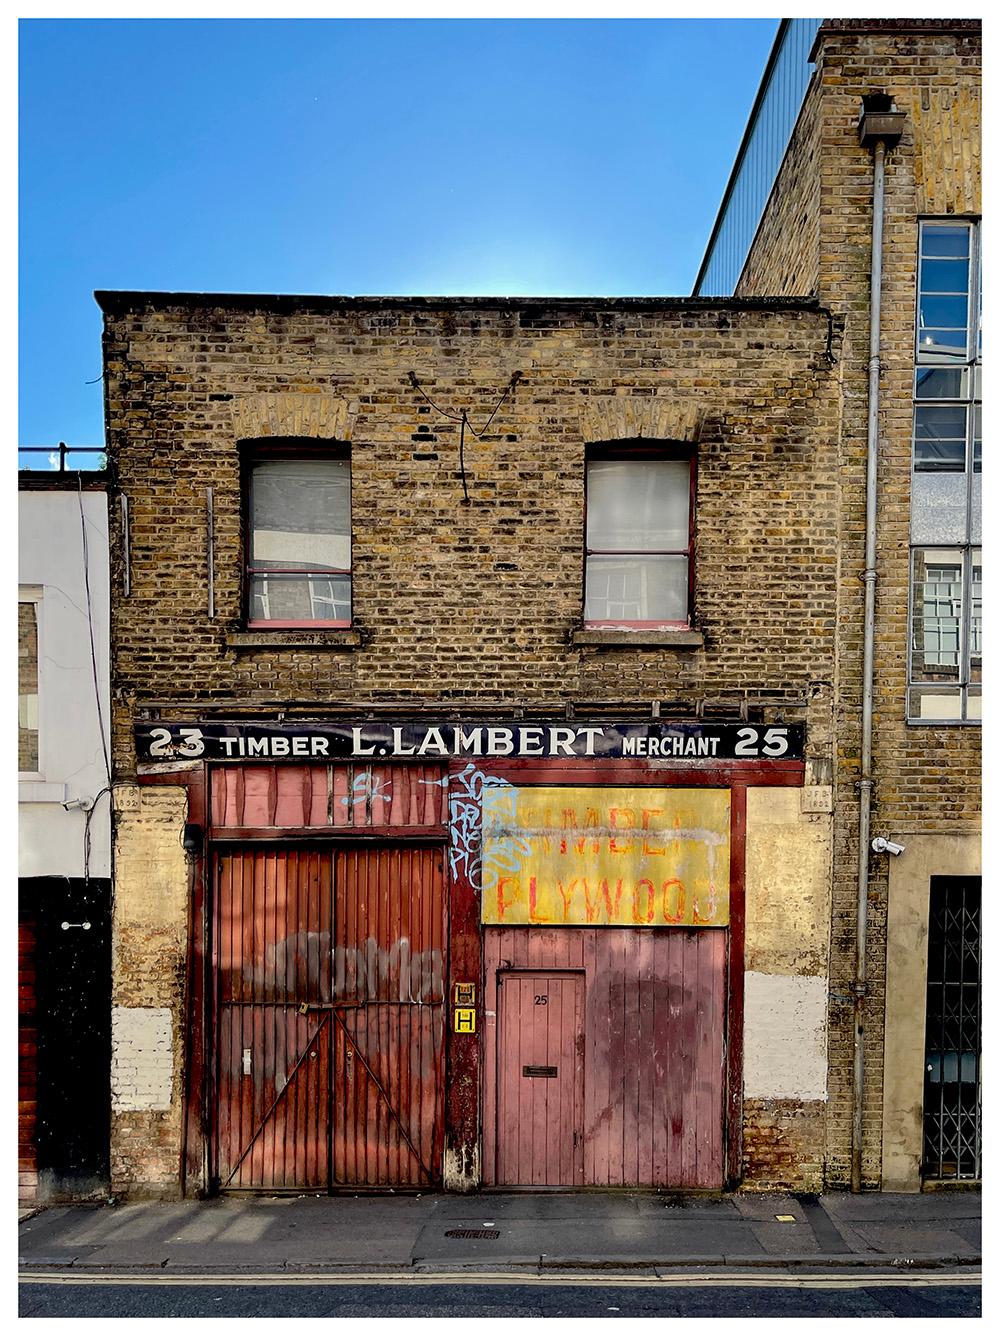 Richard Heeps Print - Timber Merchant, London - East London architecture street photography